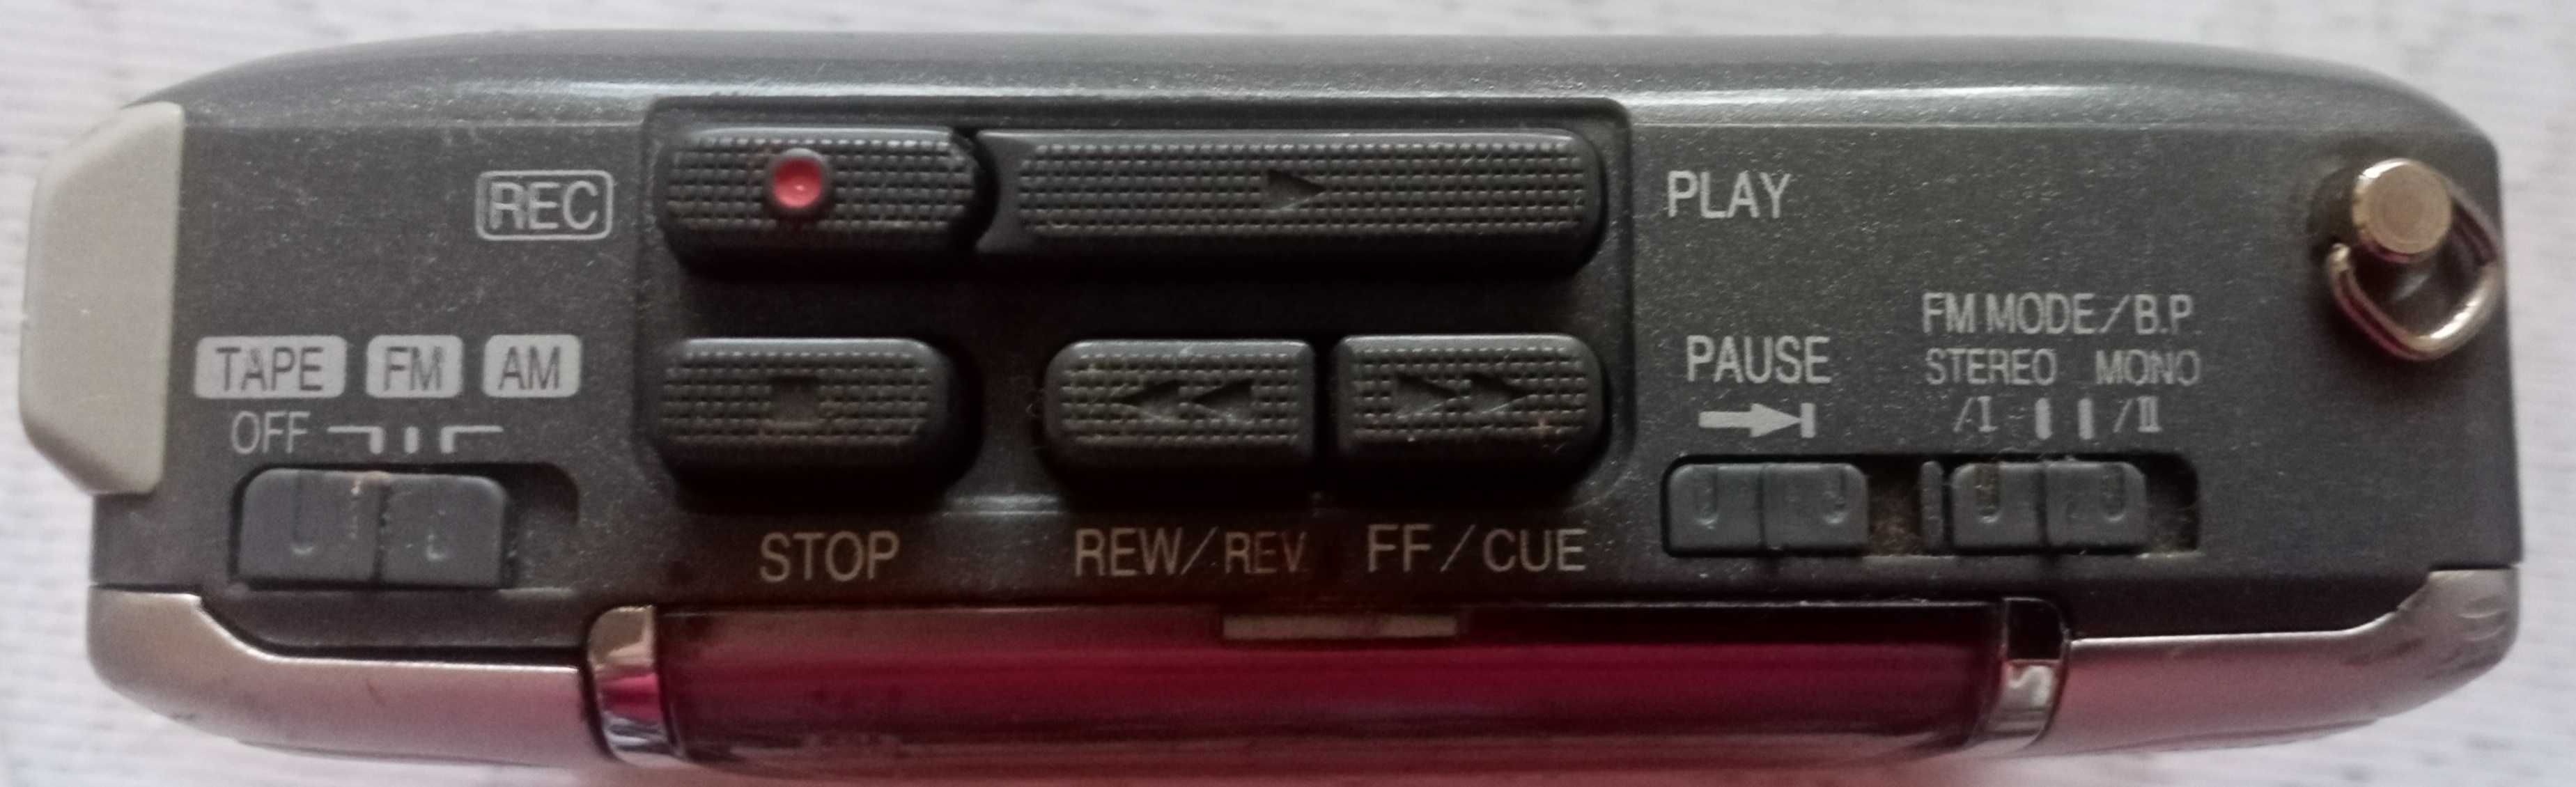 Panasonic RQ-A200 Stereo Radio Cassette Recorder dyktafon typu Walkman